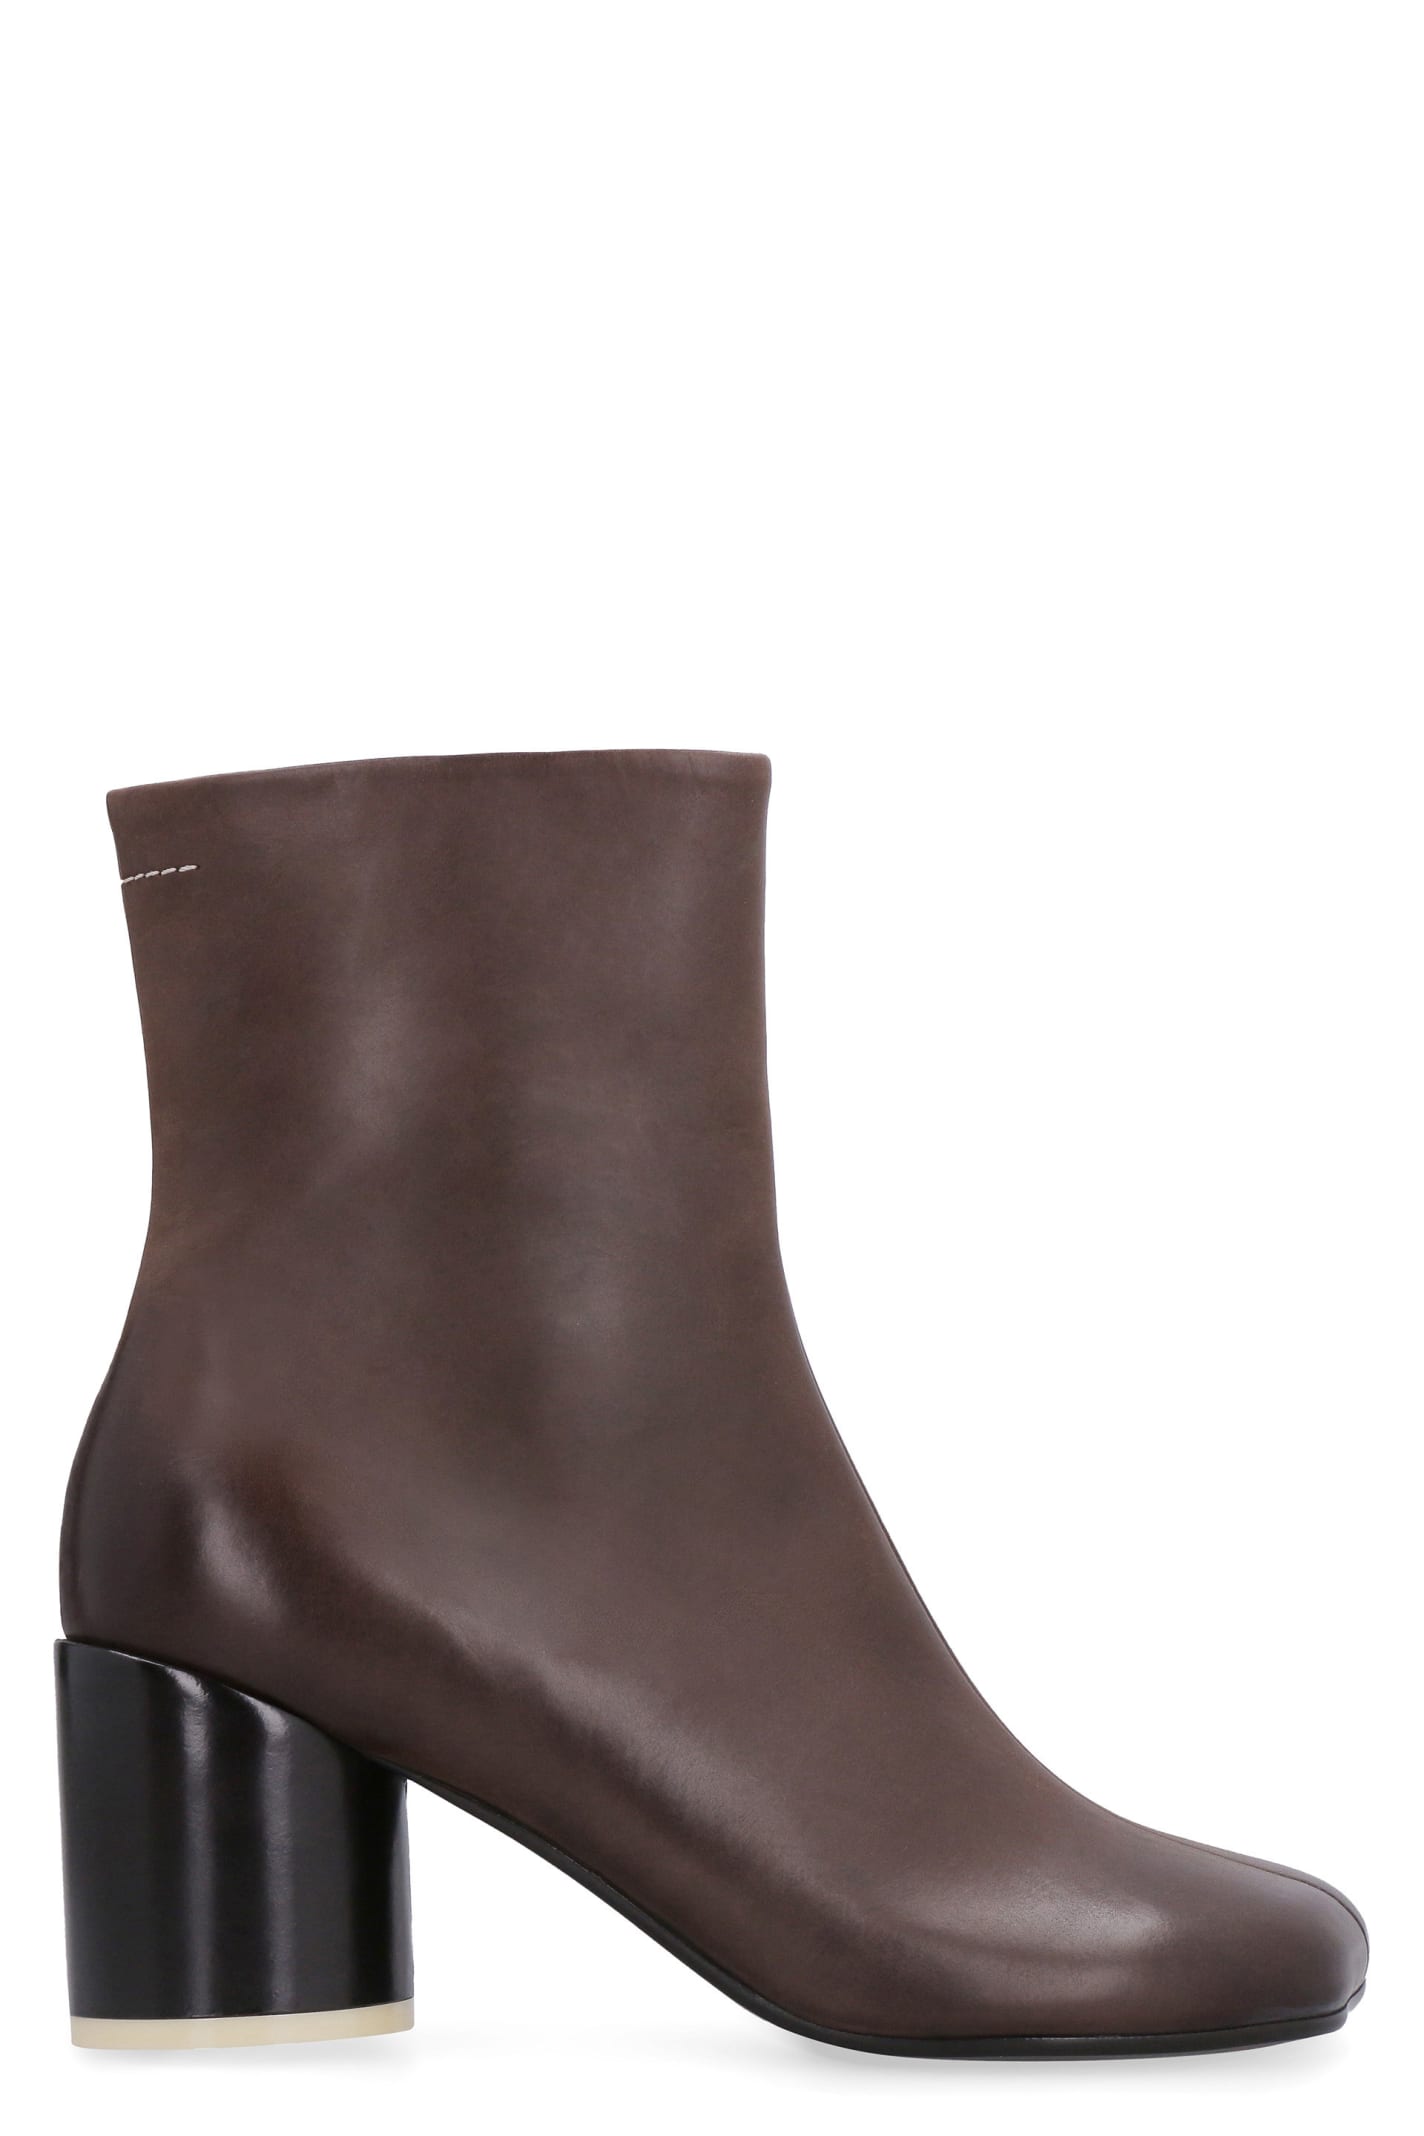 MM6 Maison Margiela Leather Ankle Boots